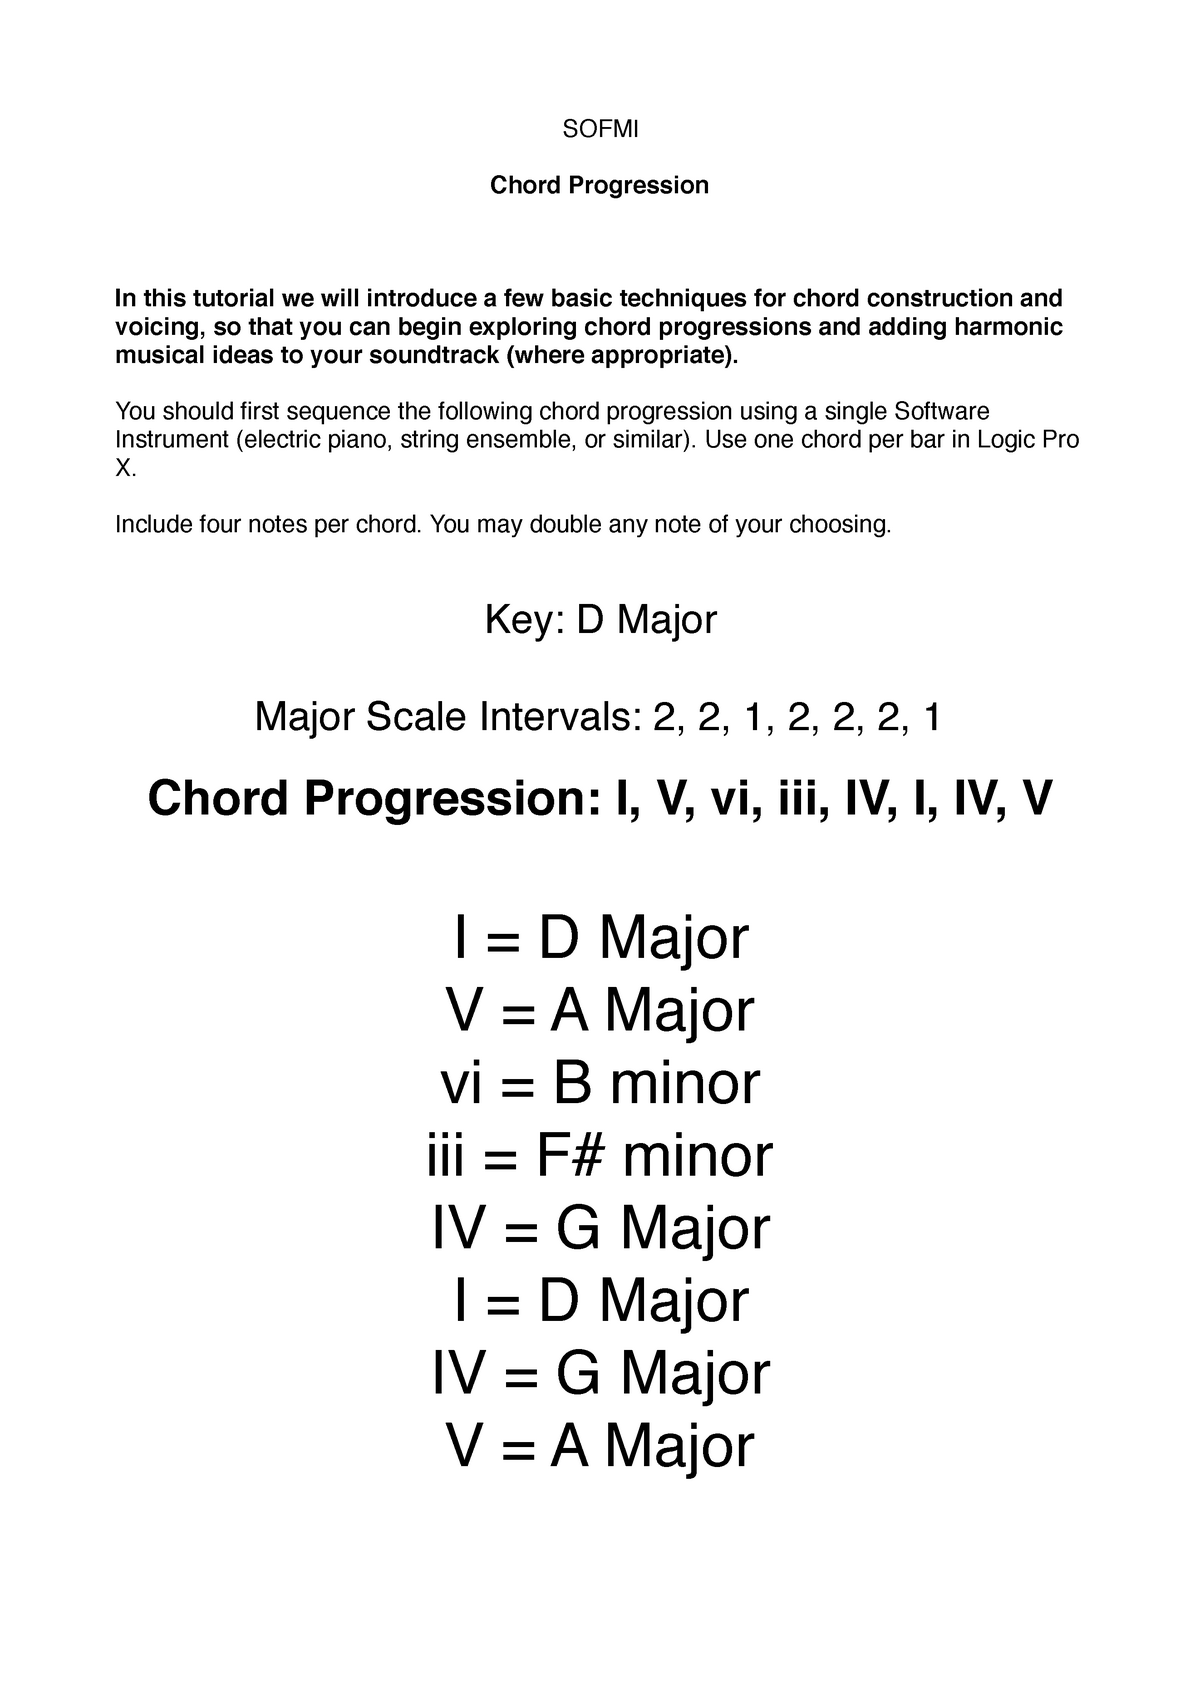 Sofmi Chord Progression Excercise Handout Sofmi Chord Progression In This Studocu